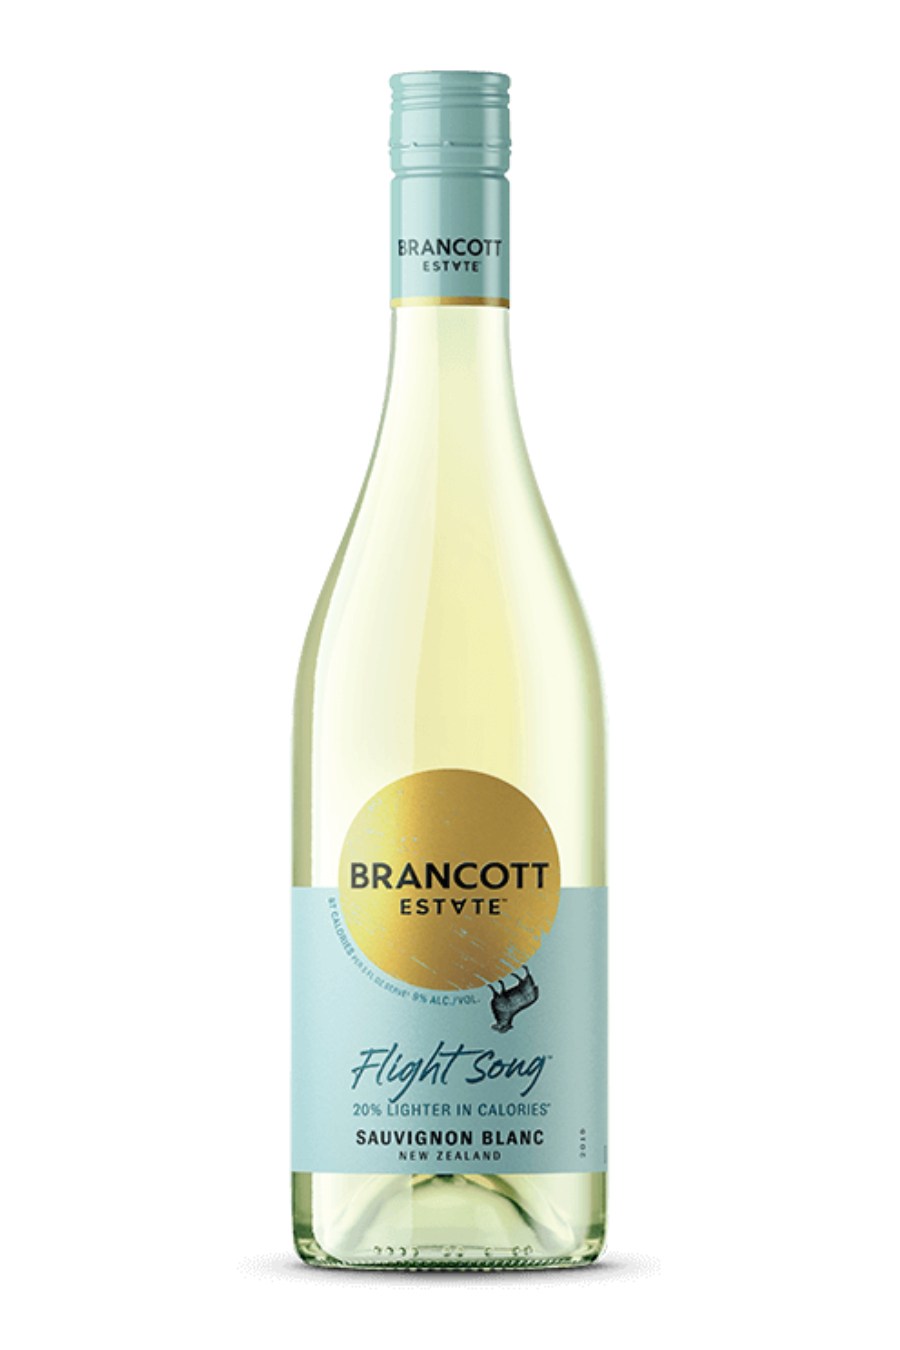 Sauvignon Blanc, Thornton Winery